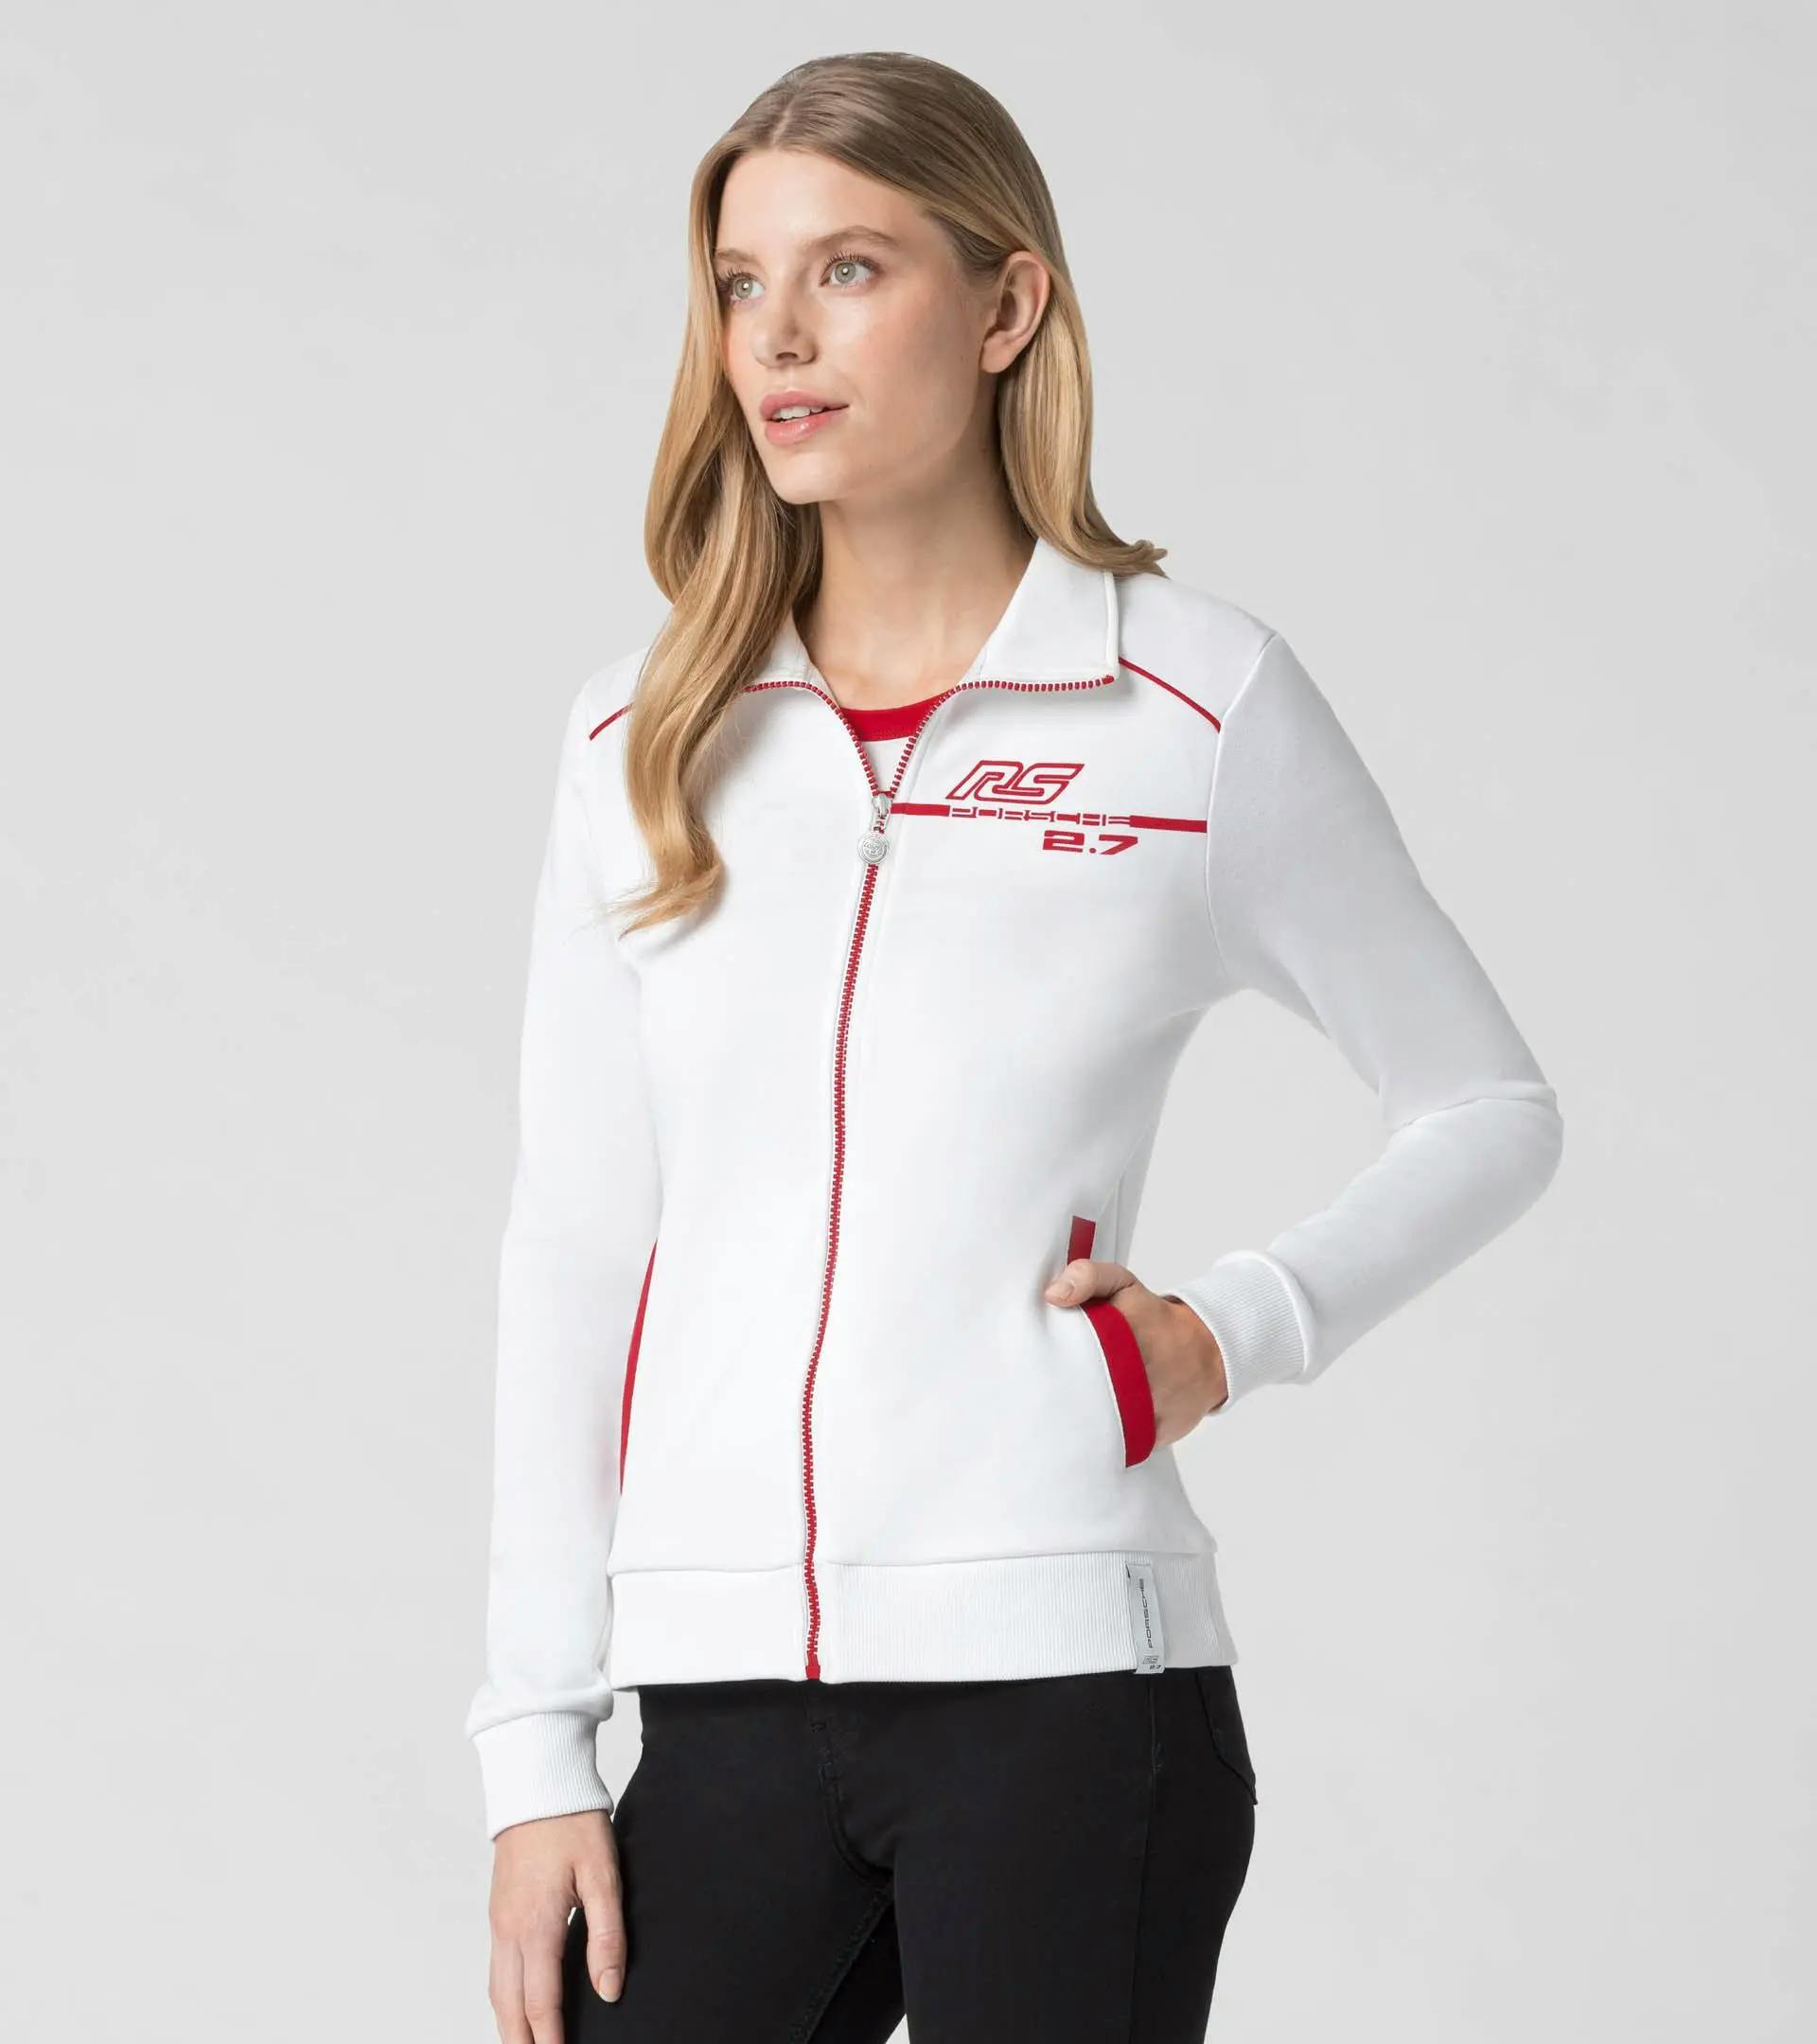 Women's training jacket – RS 2.7 5